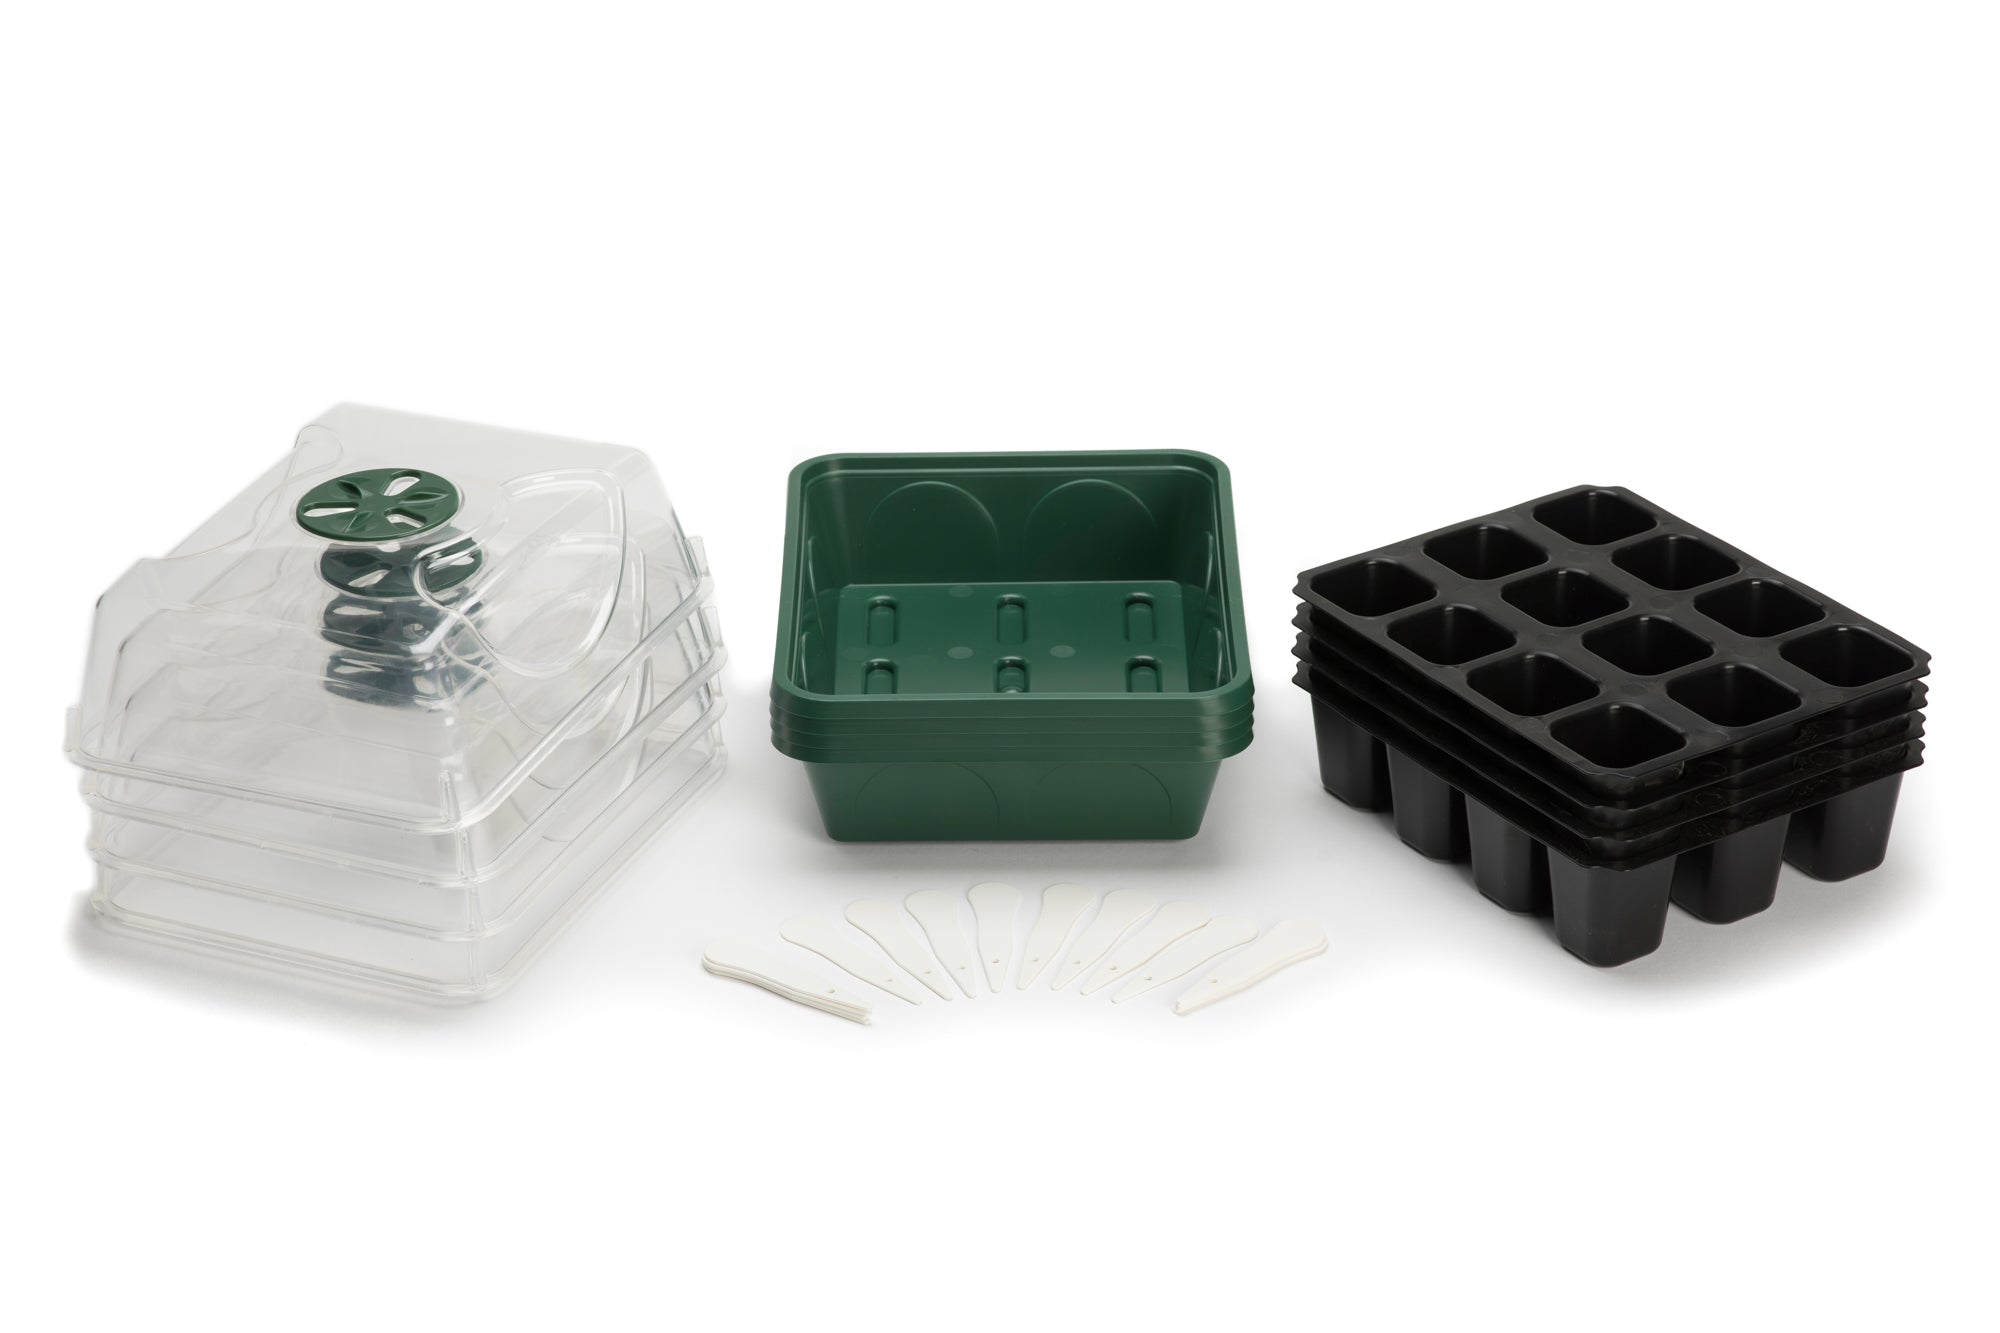 Small Propagator Seedling Tray Germination Starter Kit